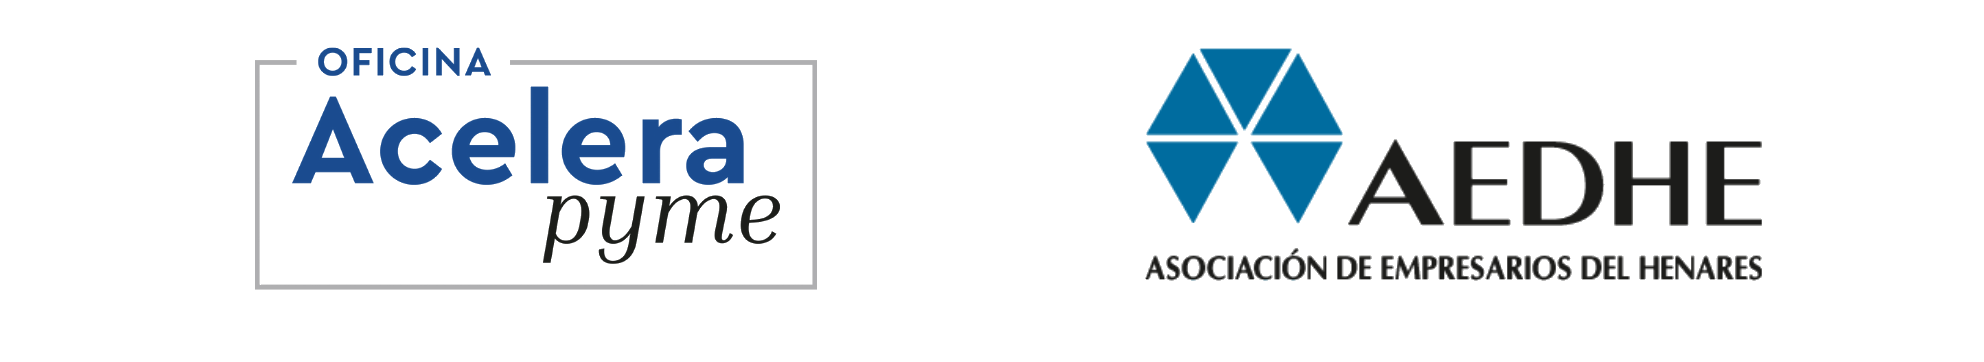 Logos para web Oficina Acelera Pyme AEDHE-modified